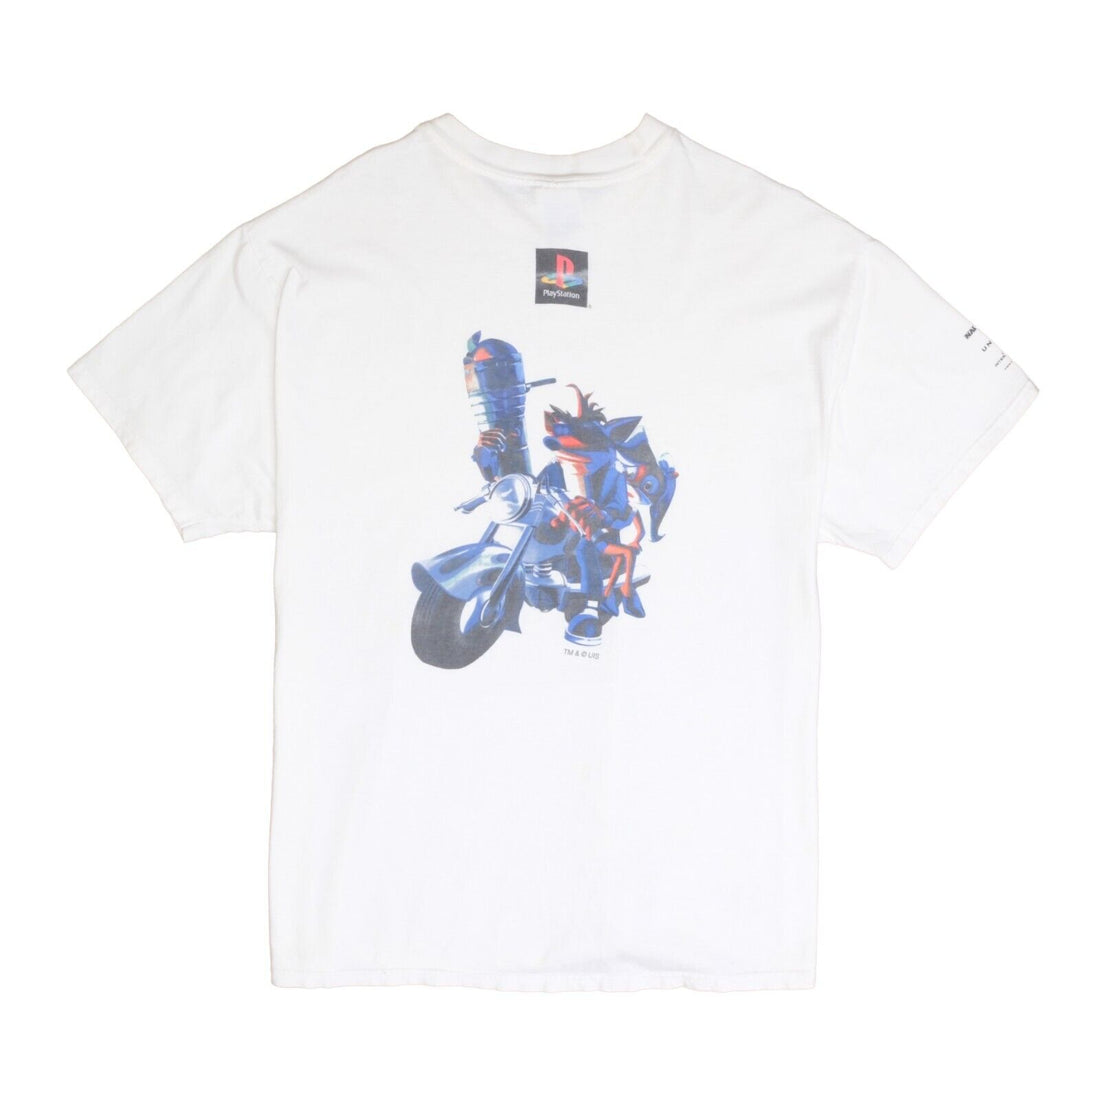 Vintage Crash Bandicoot 3 Warped T-Shirt Size XL Videogame Playstation Promo 90s